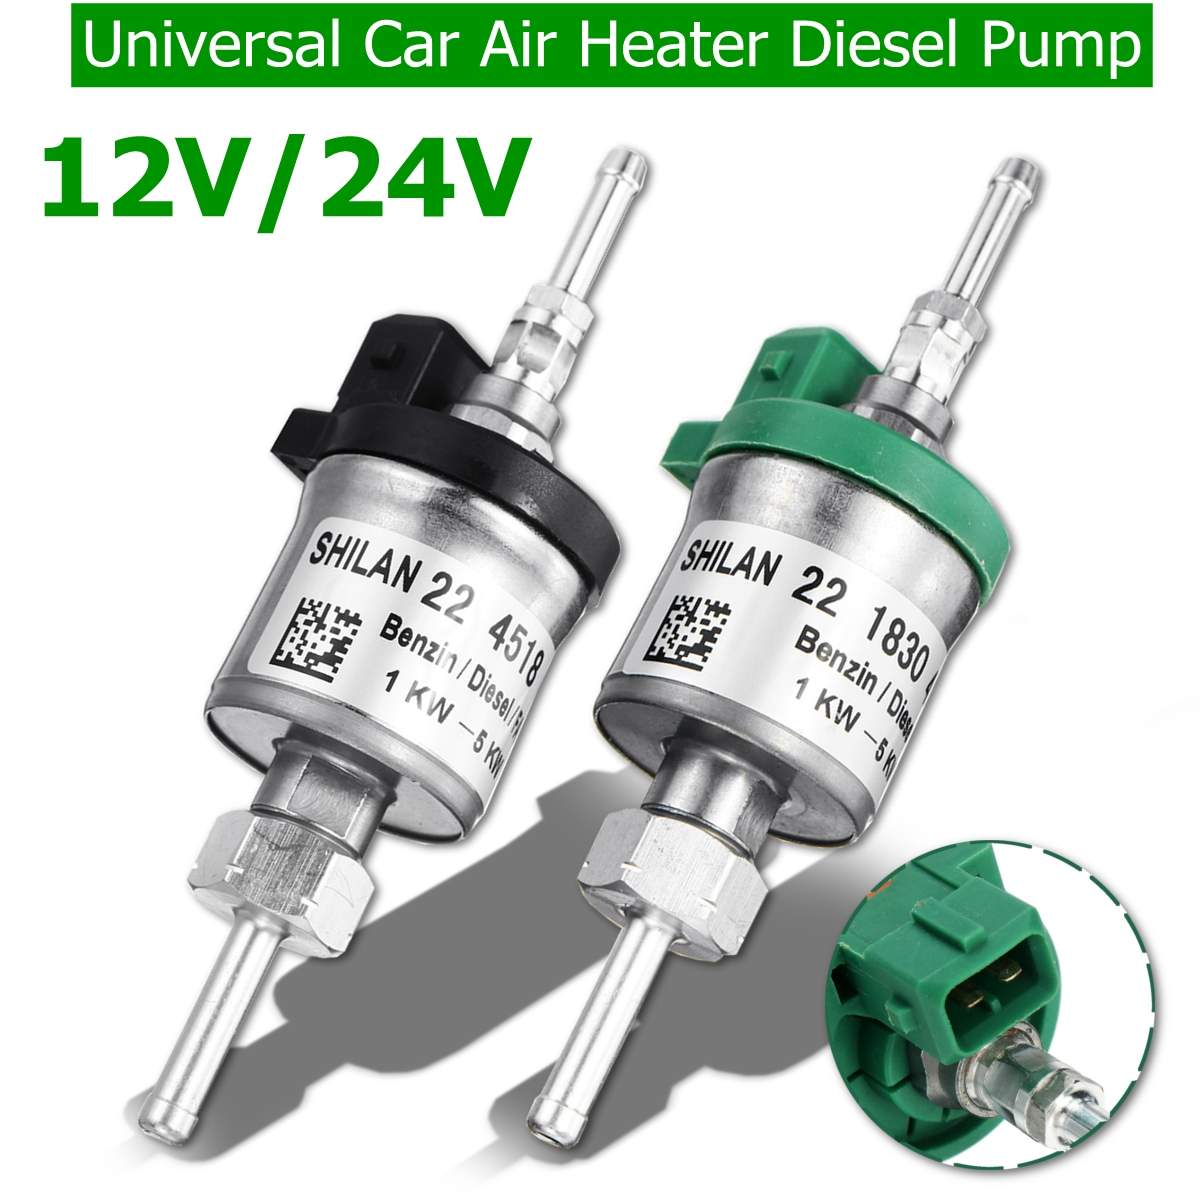 22ml Diesel Pump 12V 24V Air Diesel Parking Chinese Brand Heater